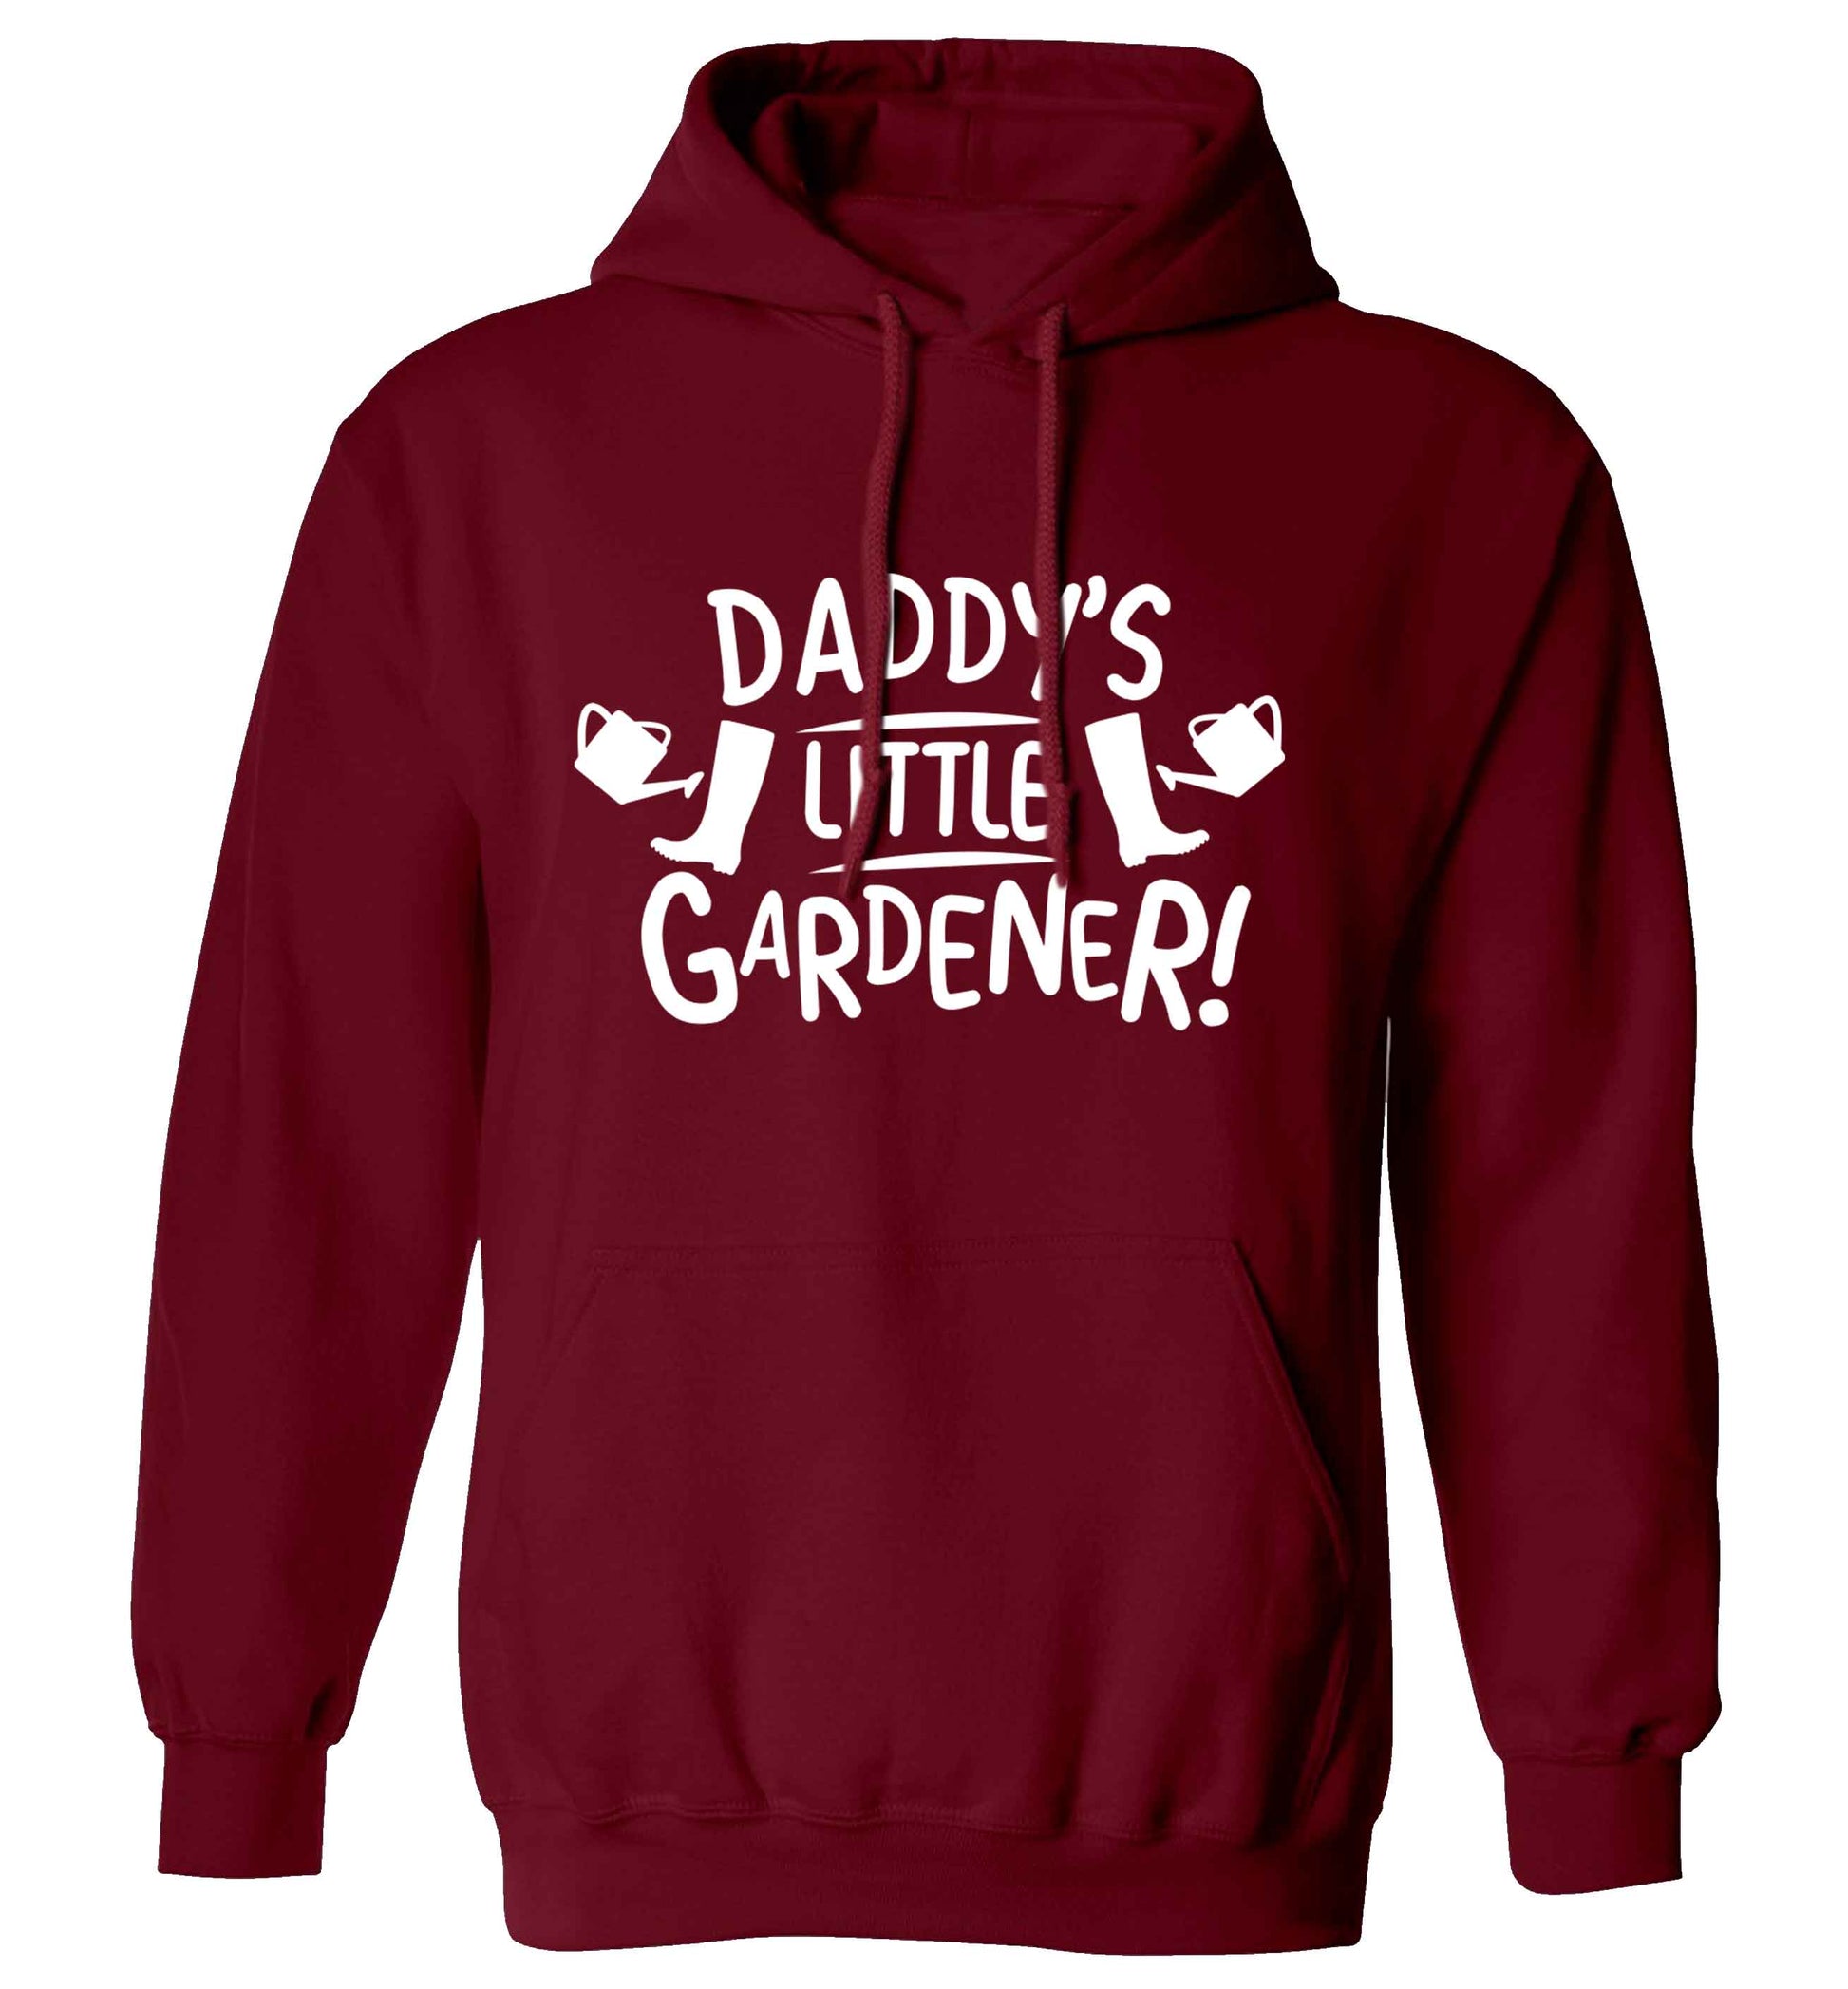 Daddy's little gardener adults unisex maroon hoodie 2XL